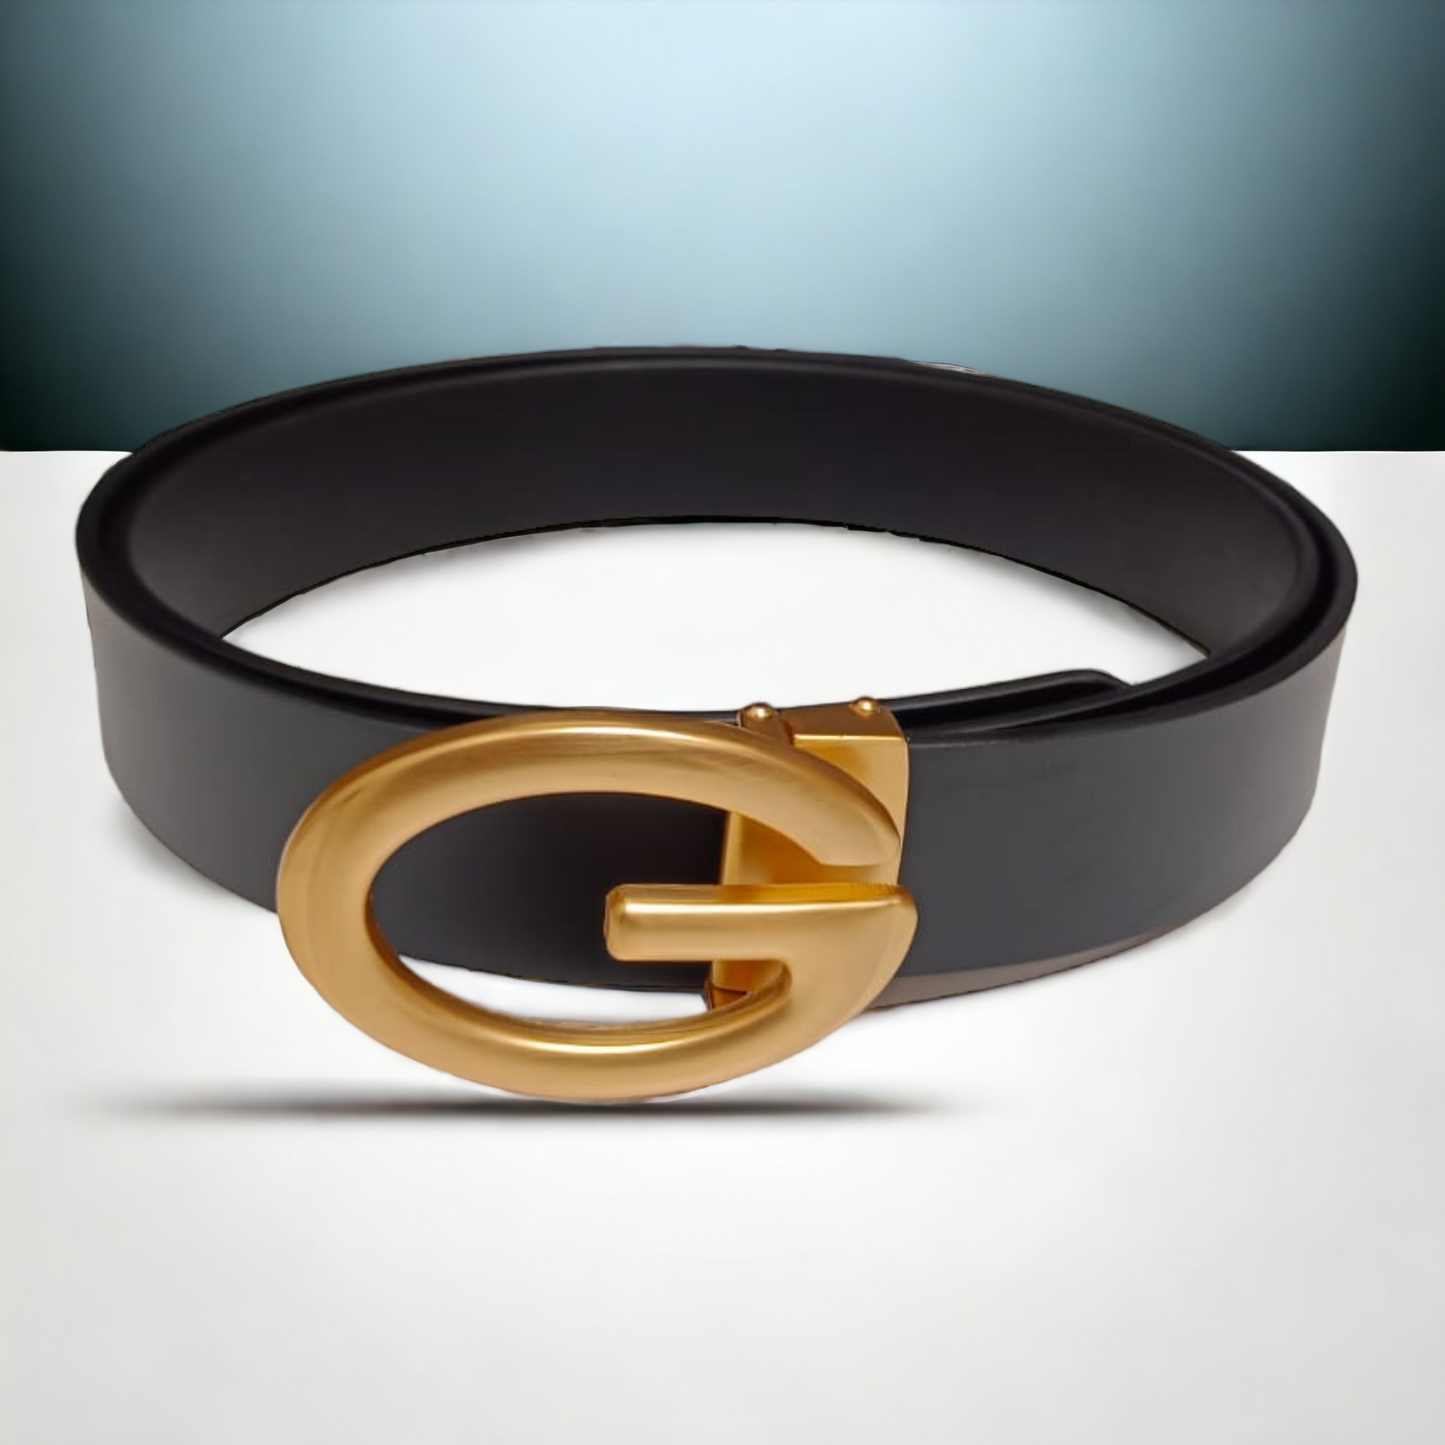 Men's Belt Needle Buckle Black Gold Size (28-40)35mm Belt